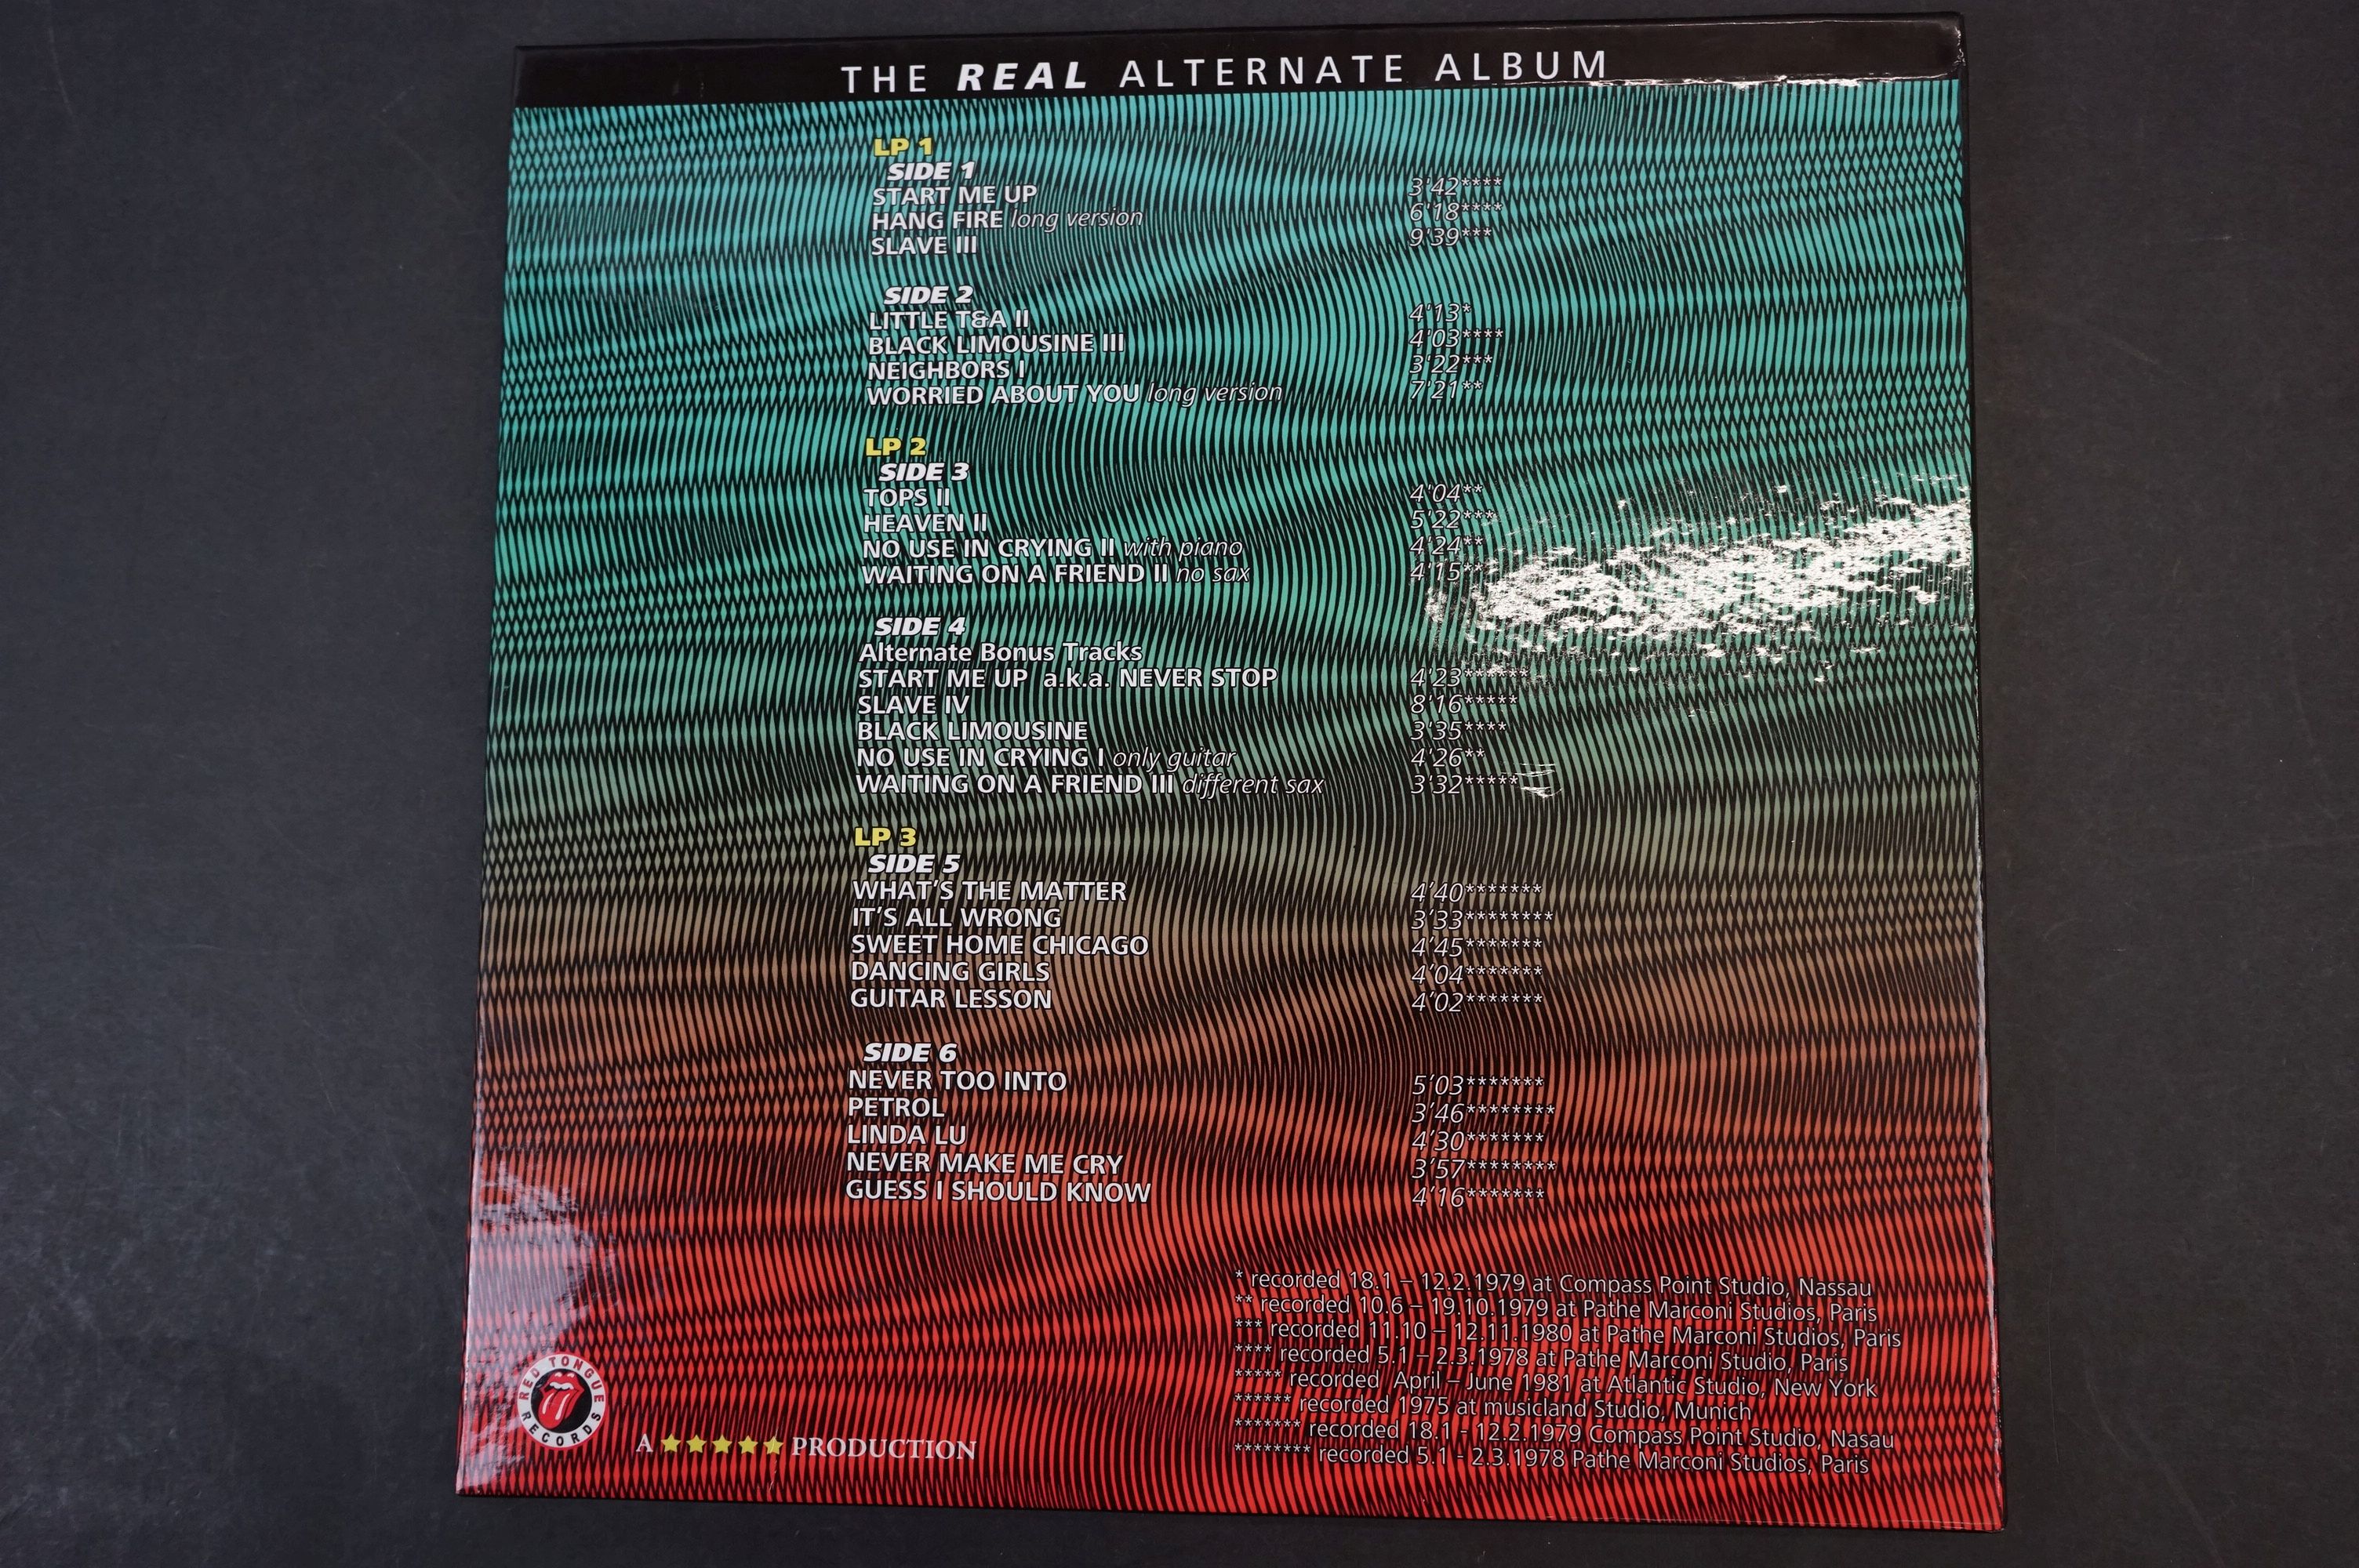 Vinyl - ltd edn The Real Alternate Album Rolling Stones Tatoo You 3 LP / 2 CD Box Set RTR001, - Image 9 of 11